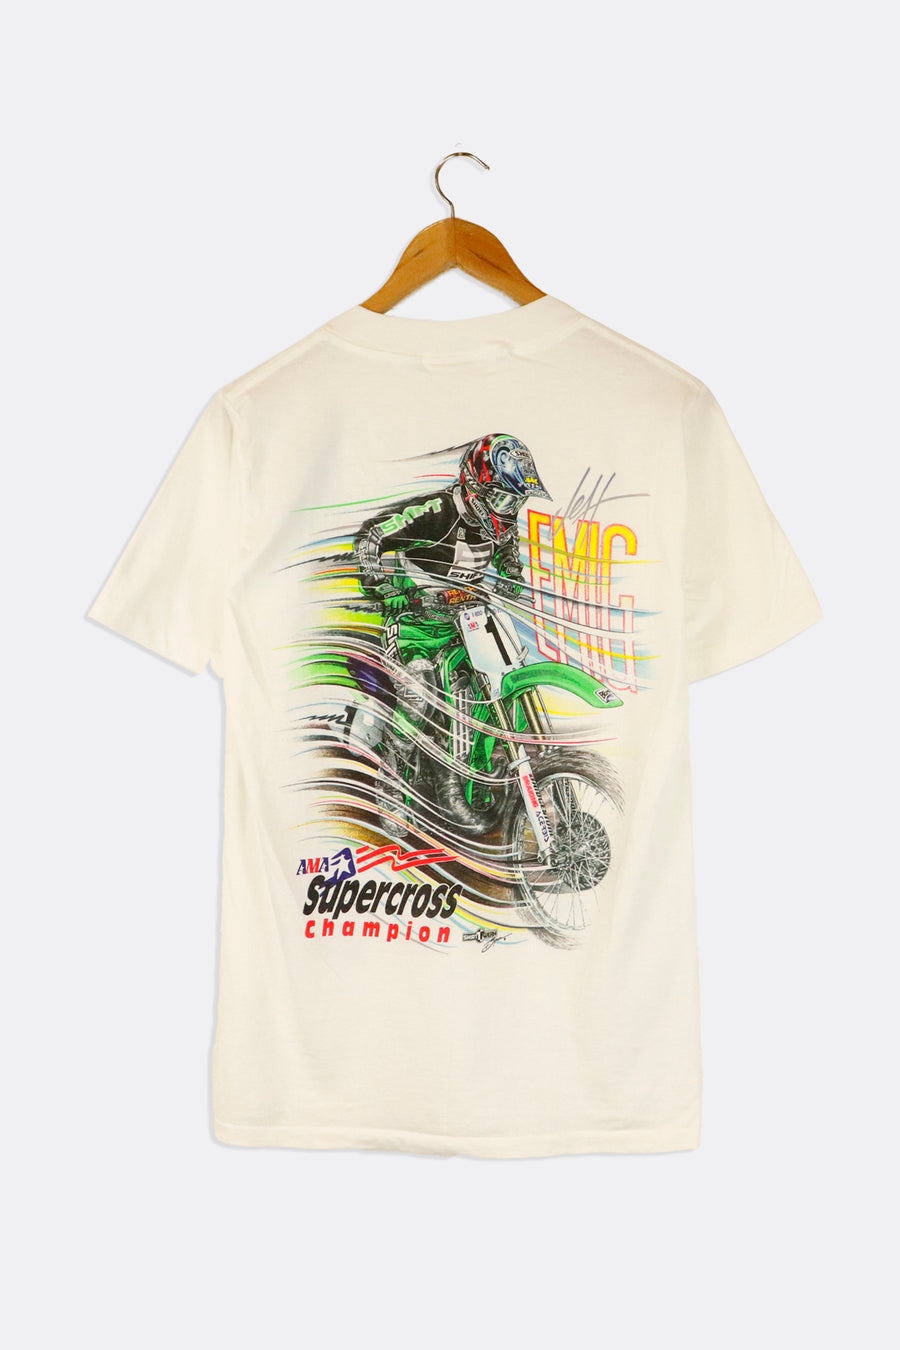 Vintage AMA Super Cross Champion Jeff Emig Graphic Vinyl T Shirt Sz S